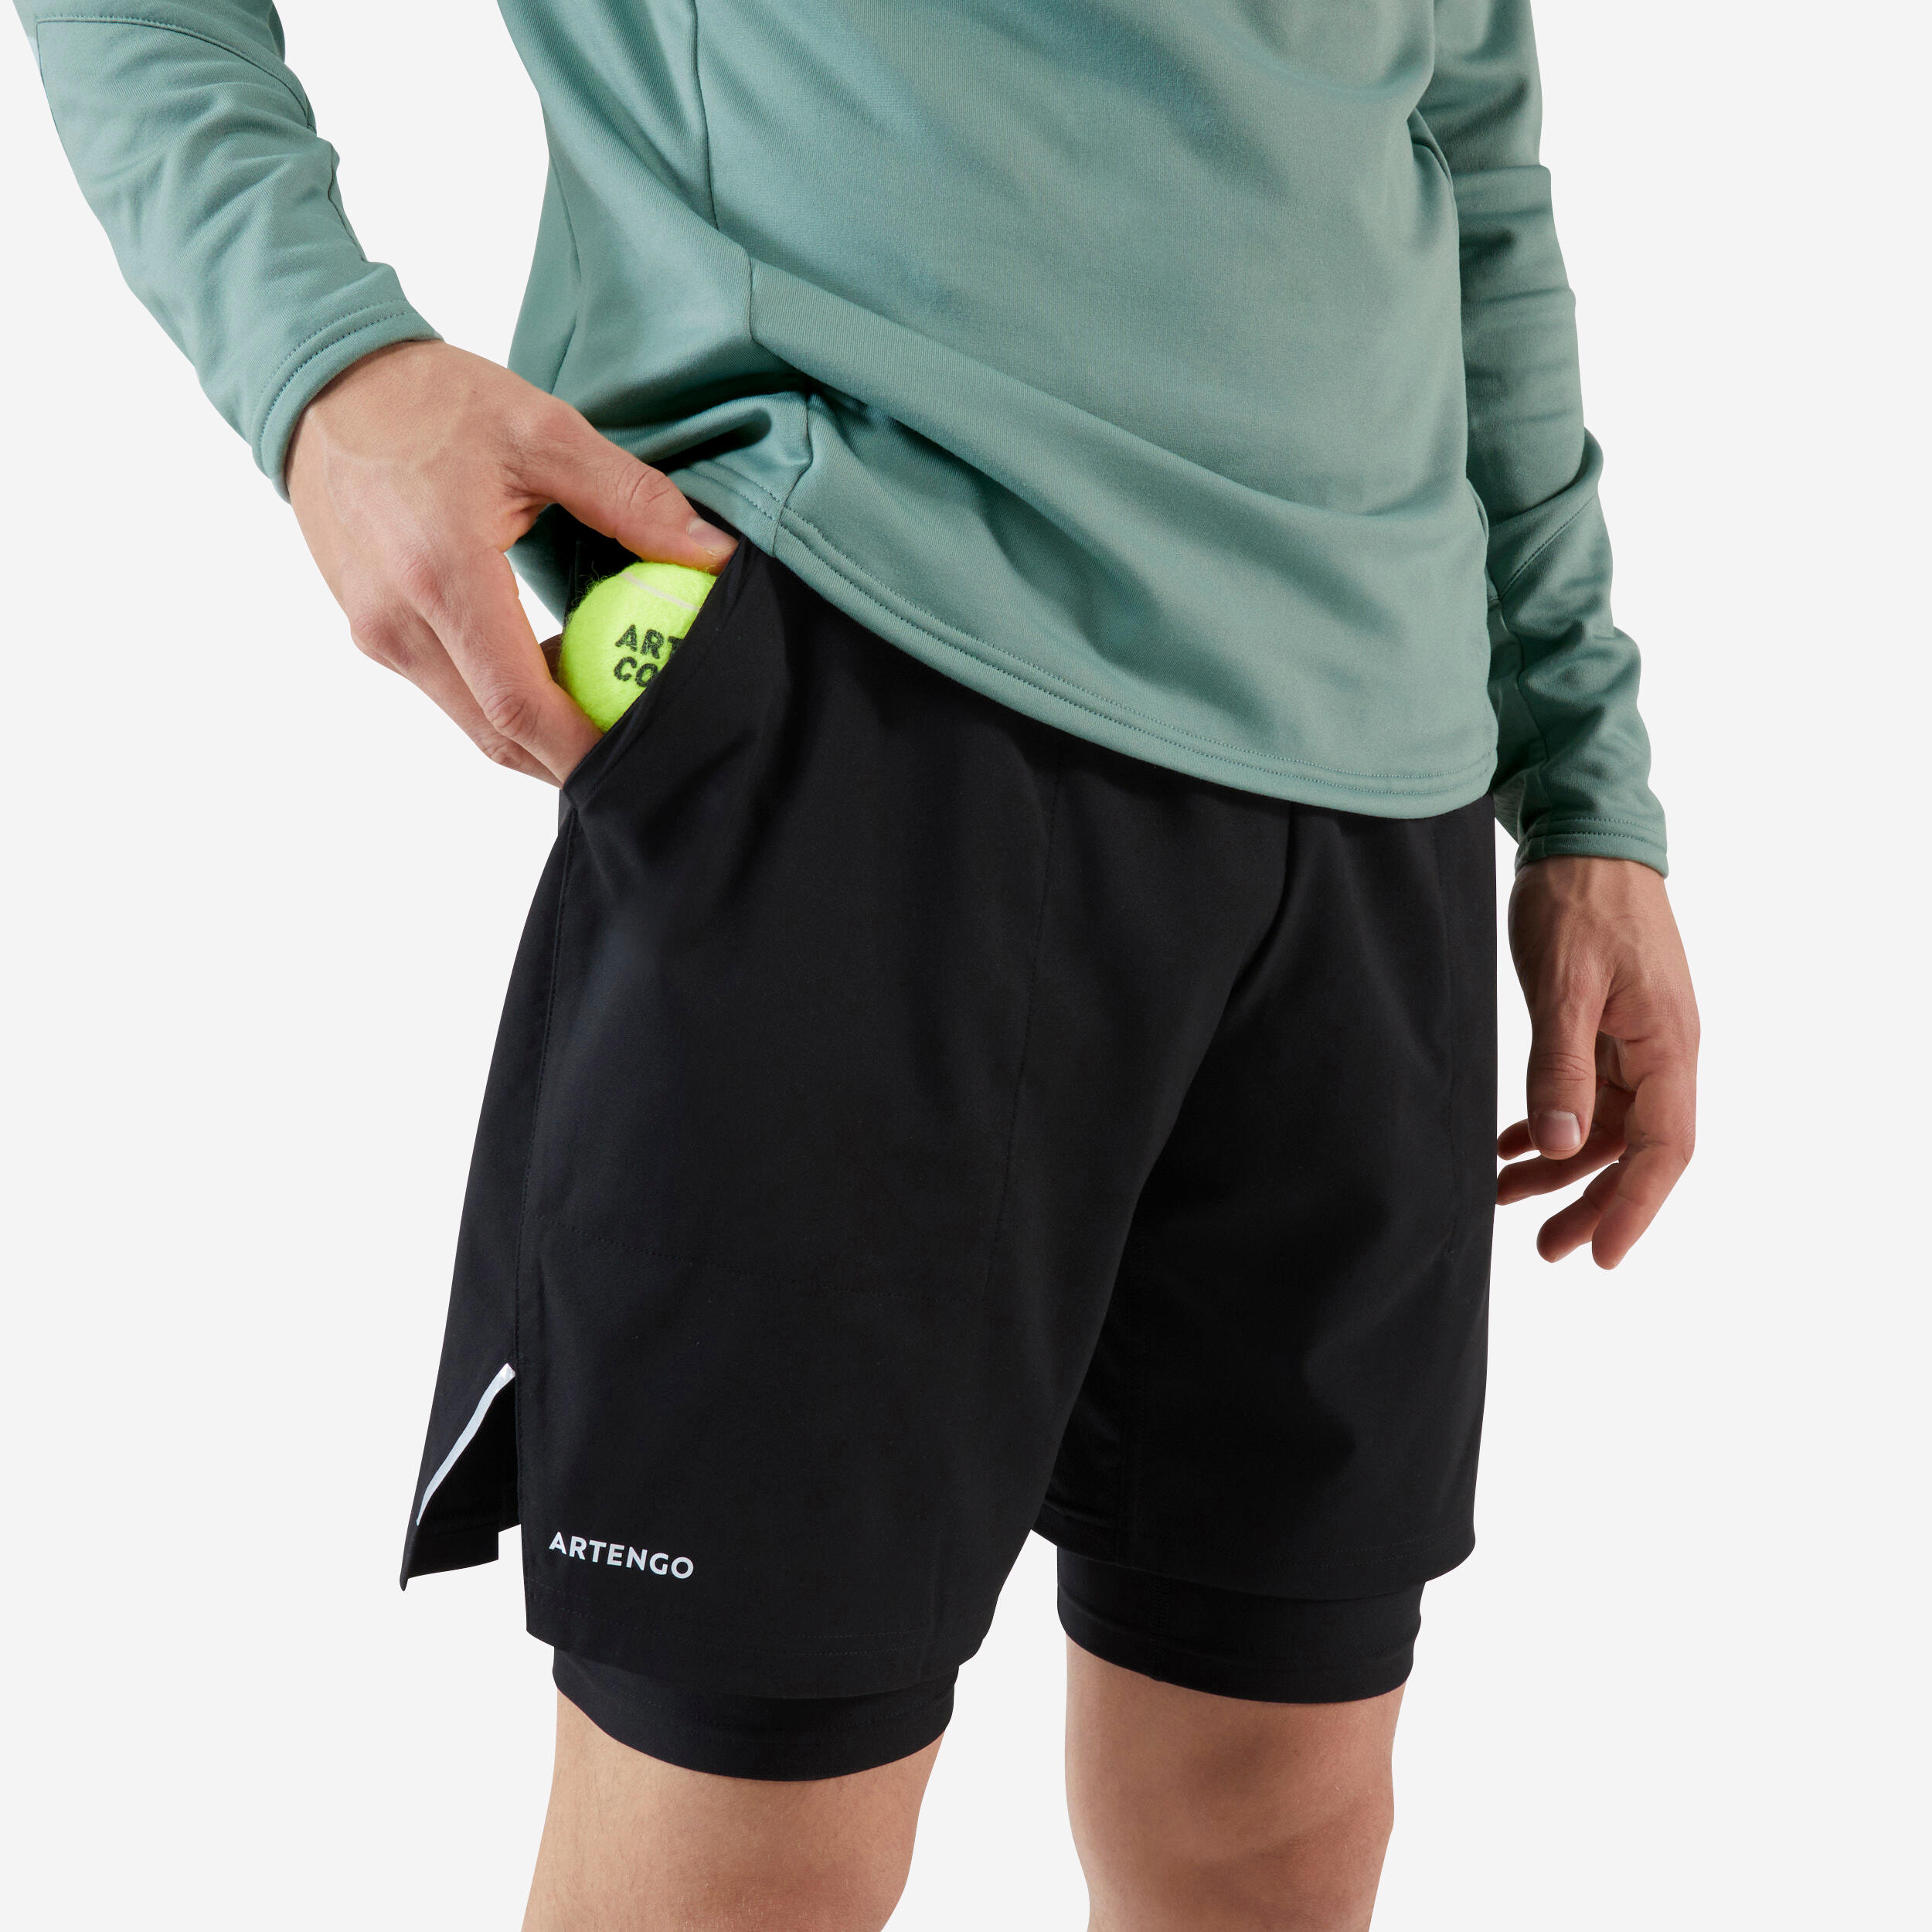 ARTENGO Men's Tennis 2-in-1 Shorts and Undershorts Thermic - Black/Black